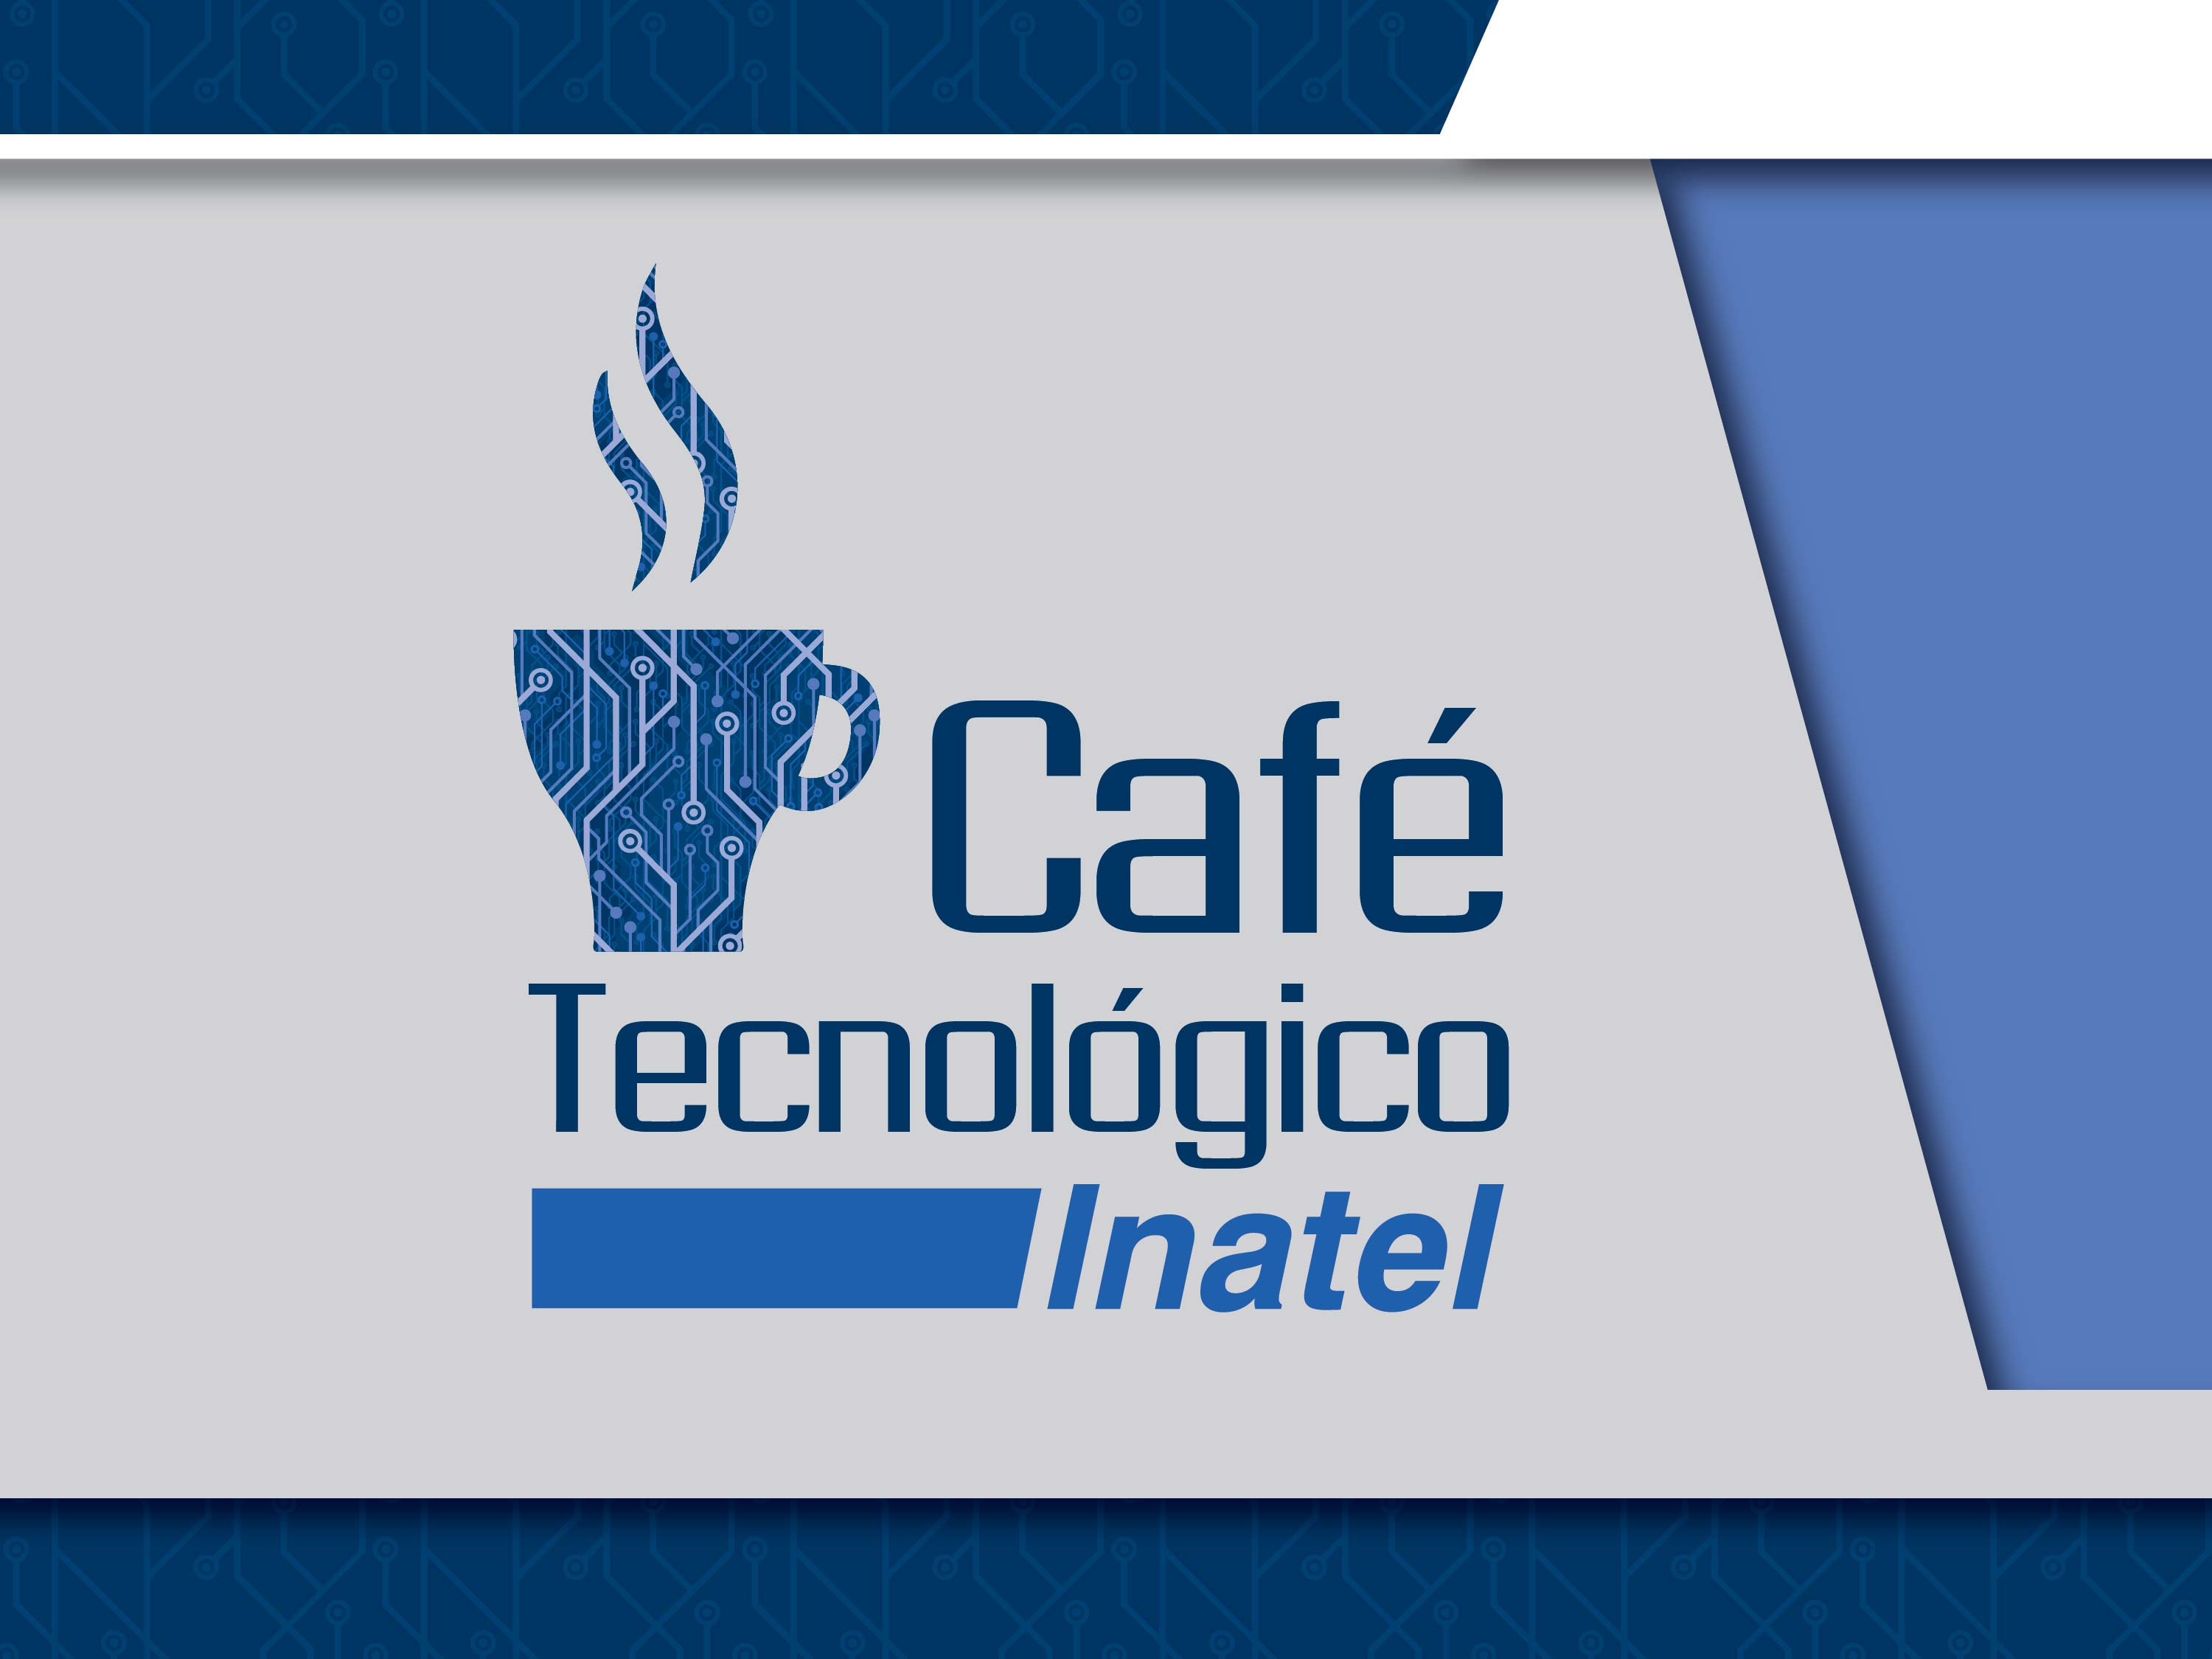 inatel-2-cafe-tecnologico